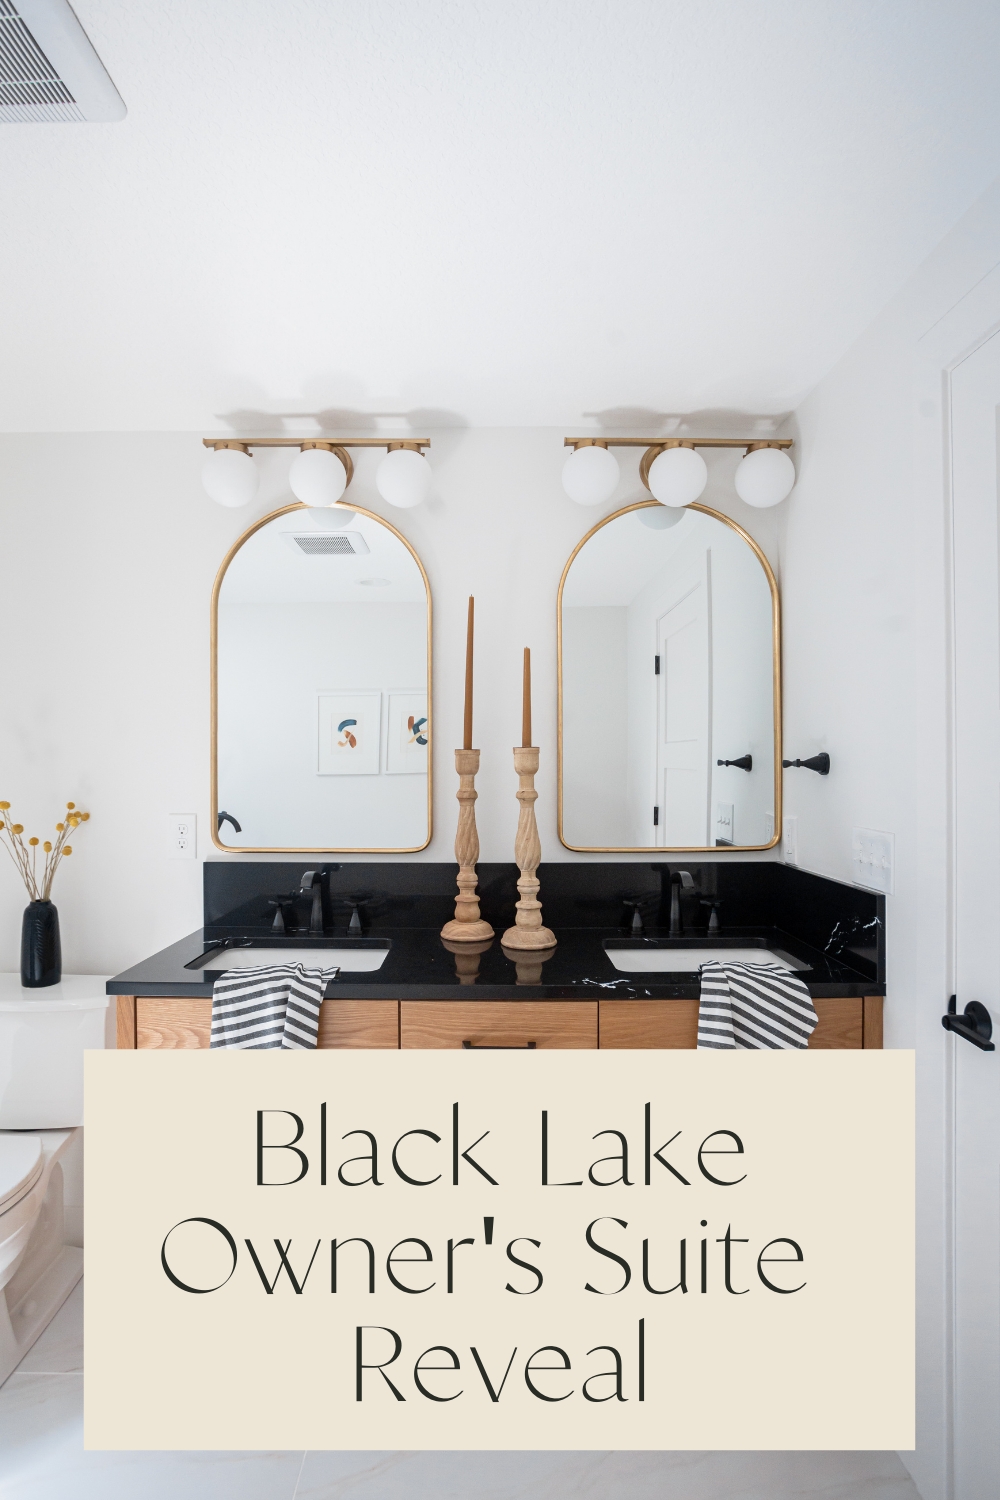 Black Lake Reveal | Owner's Suite 31